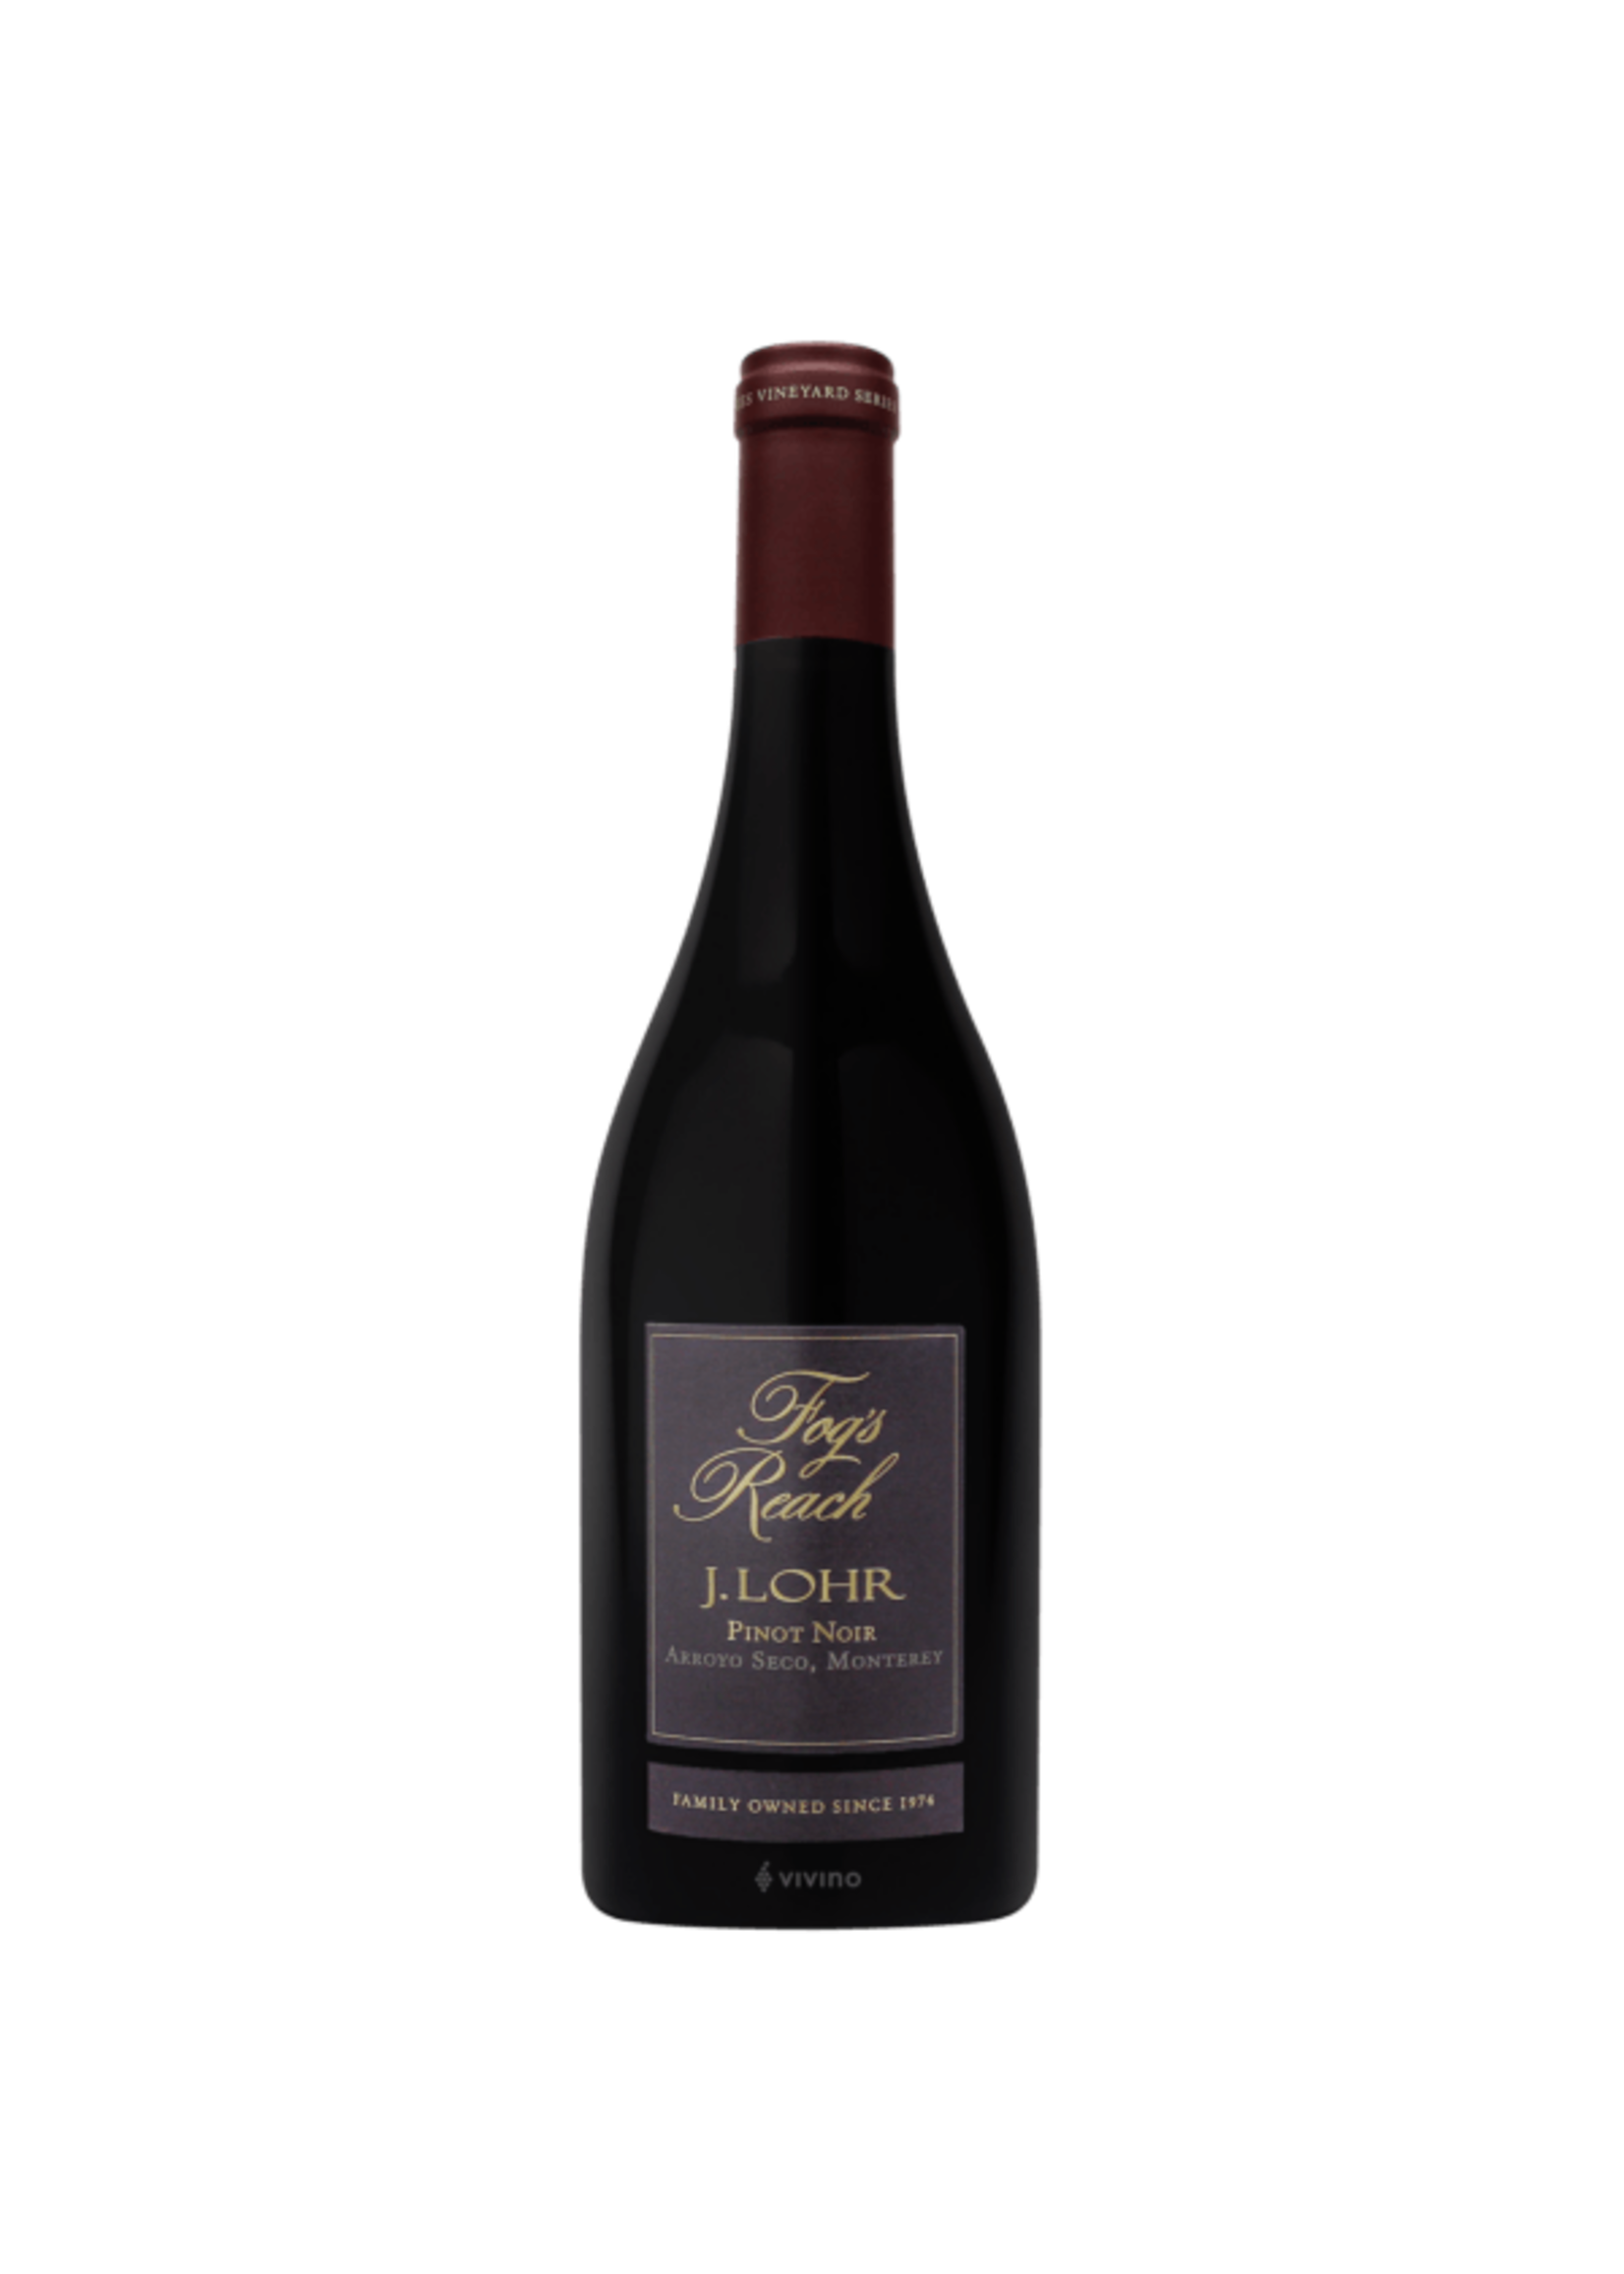 J. Lohr J. Lohr / Fog's Reach Vineyard Arroyo Seco Pinot Noir 2020 / 750mL